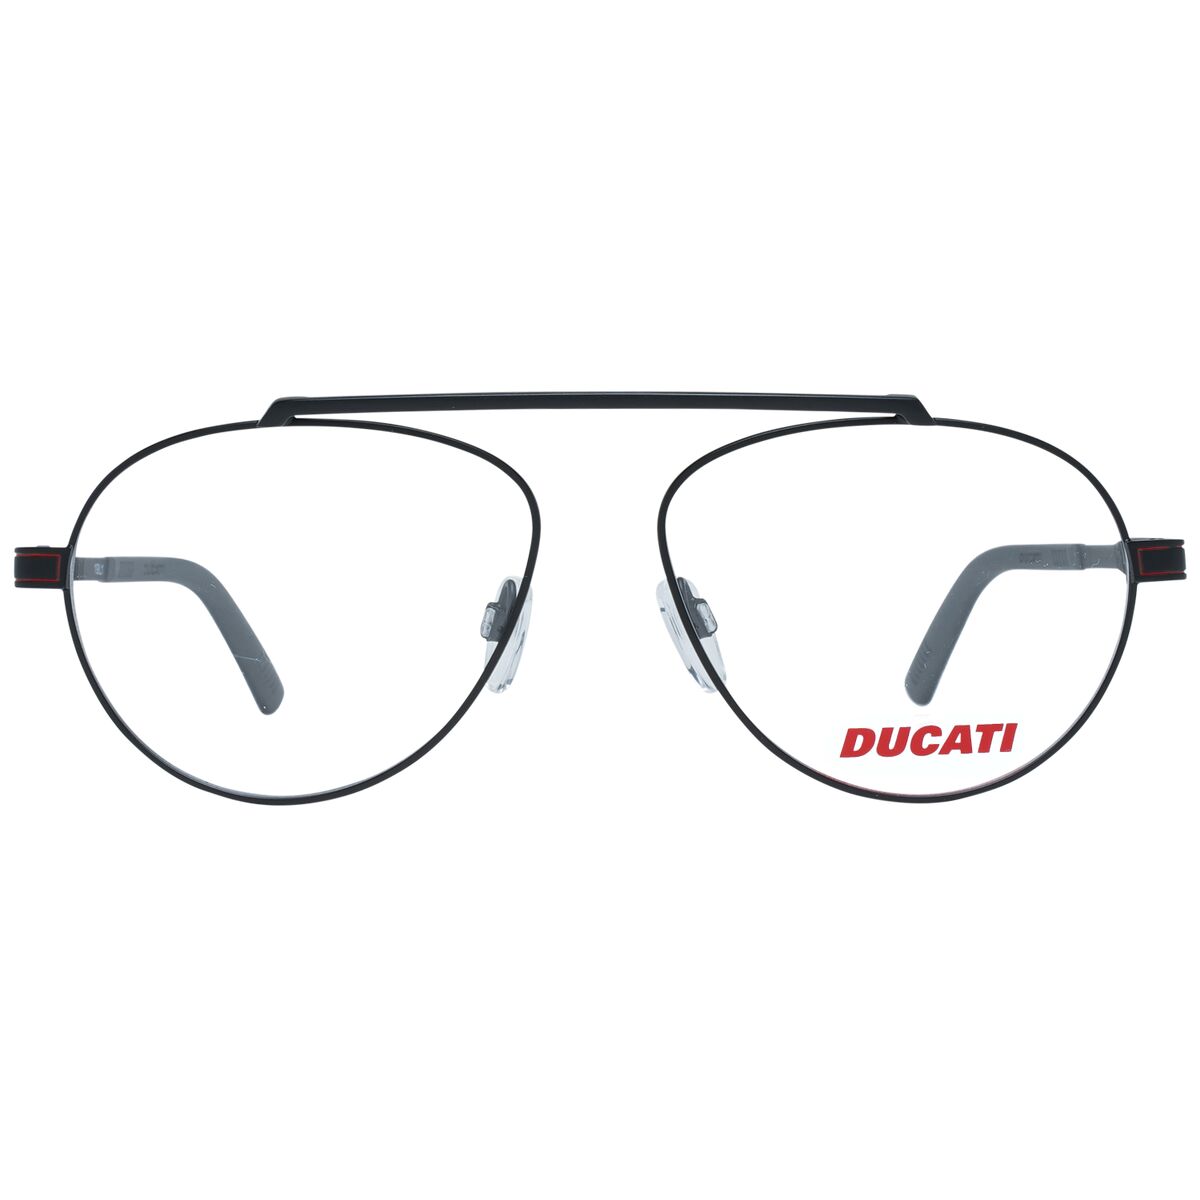 Kaufe Brillenfassung Ducati DA3029 57002 bei AWK Flagship um € 67.00